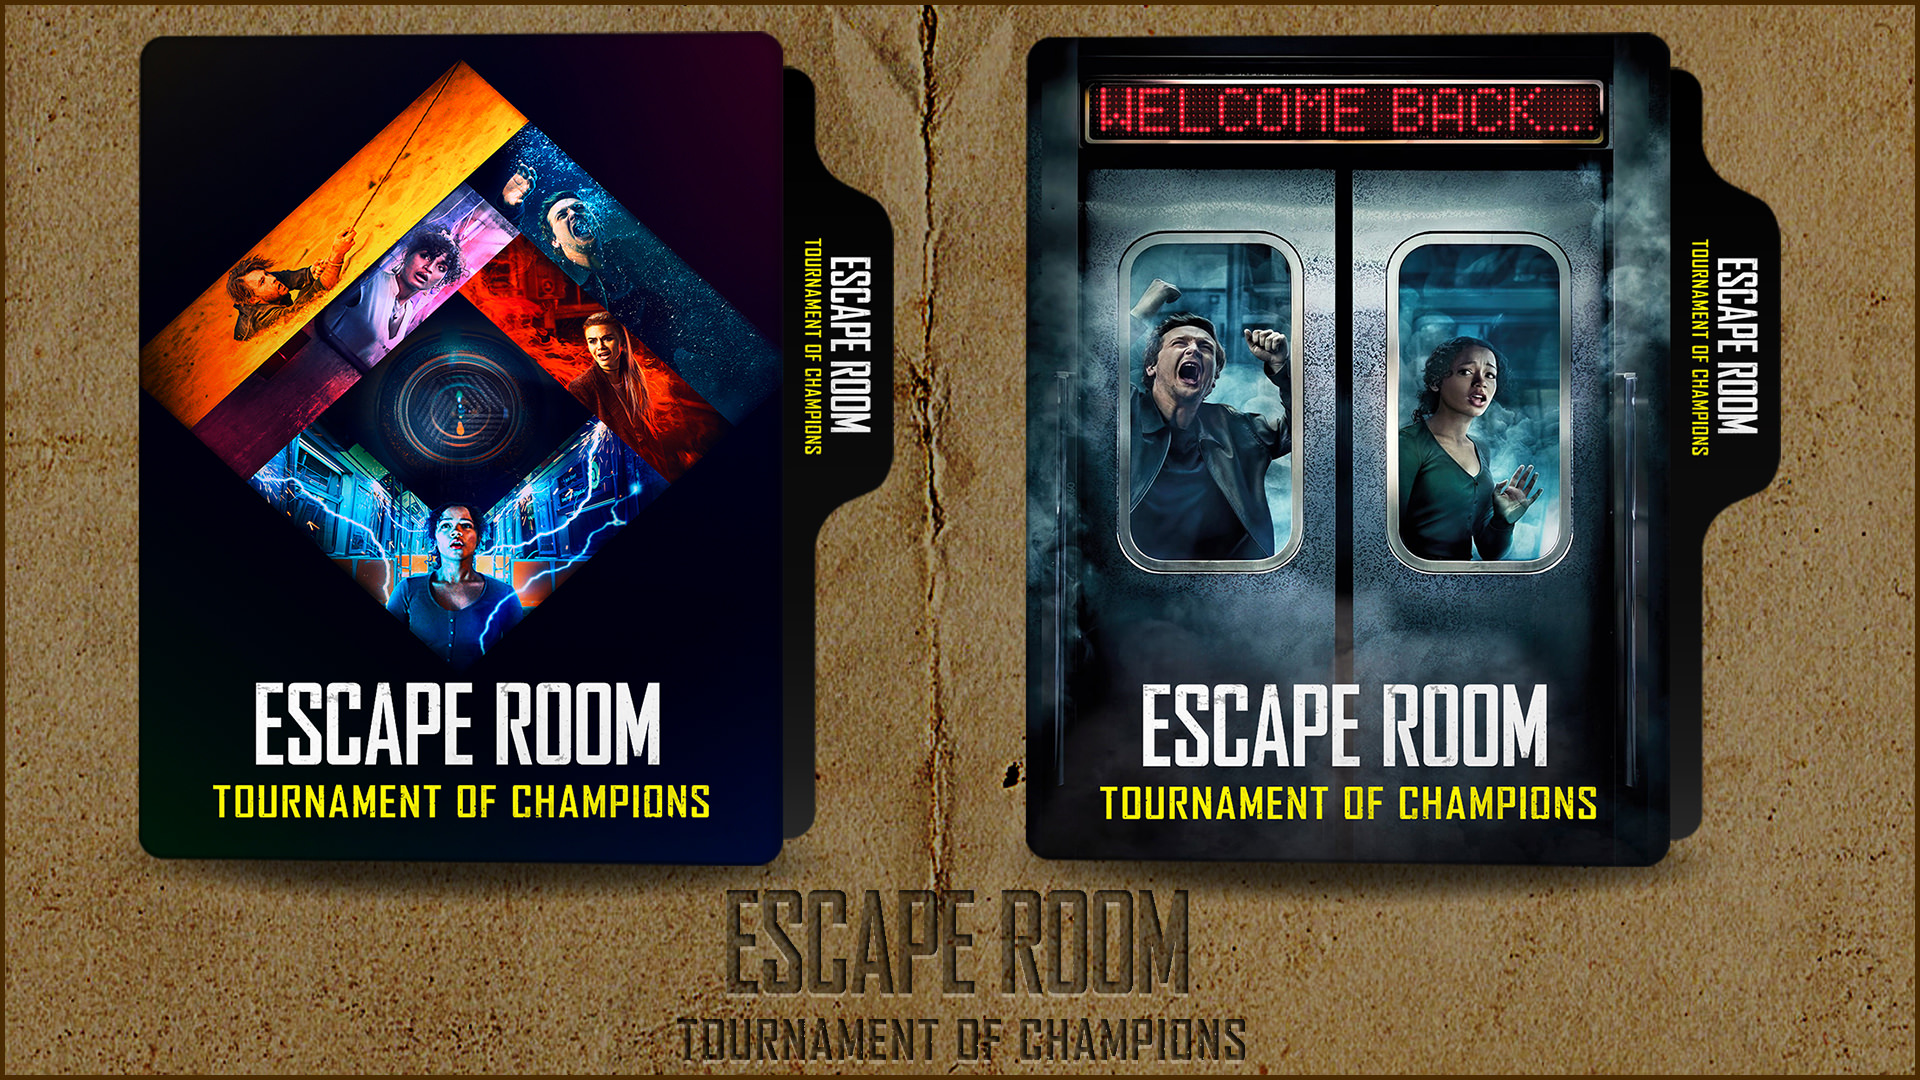 Escape room tournament of champions